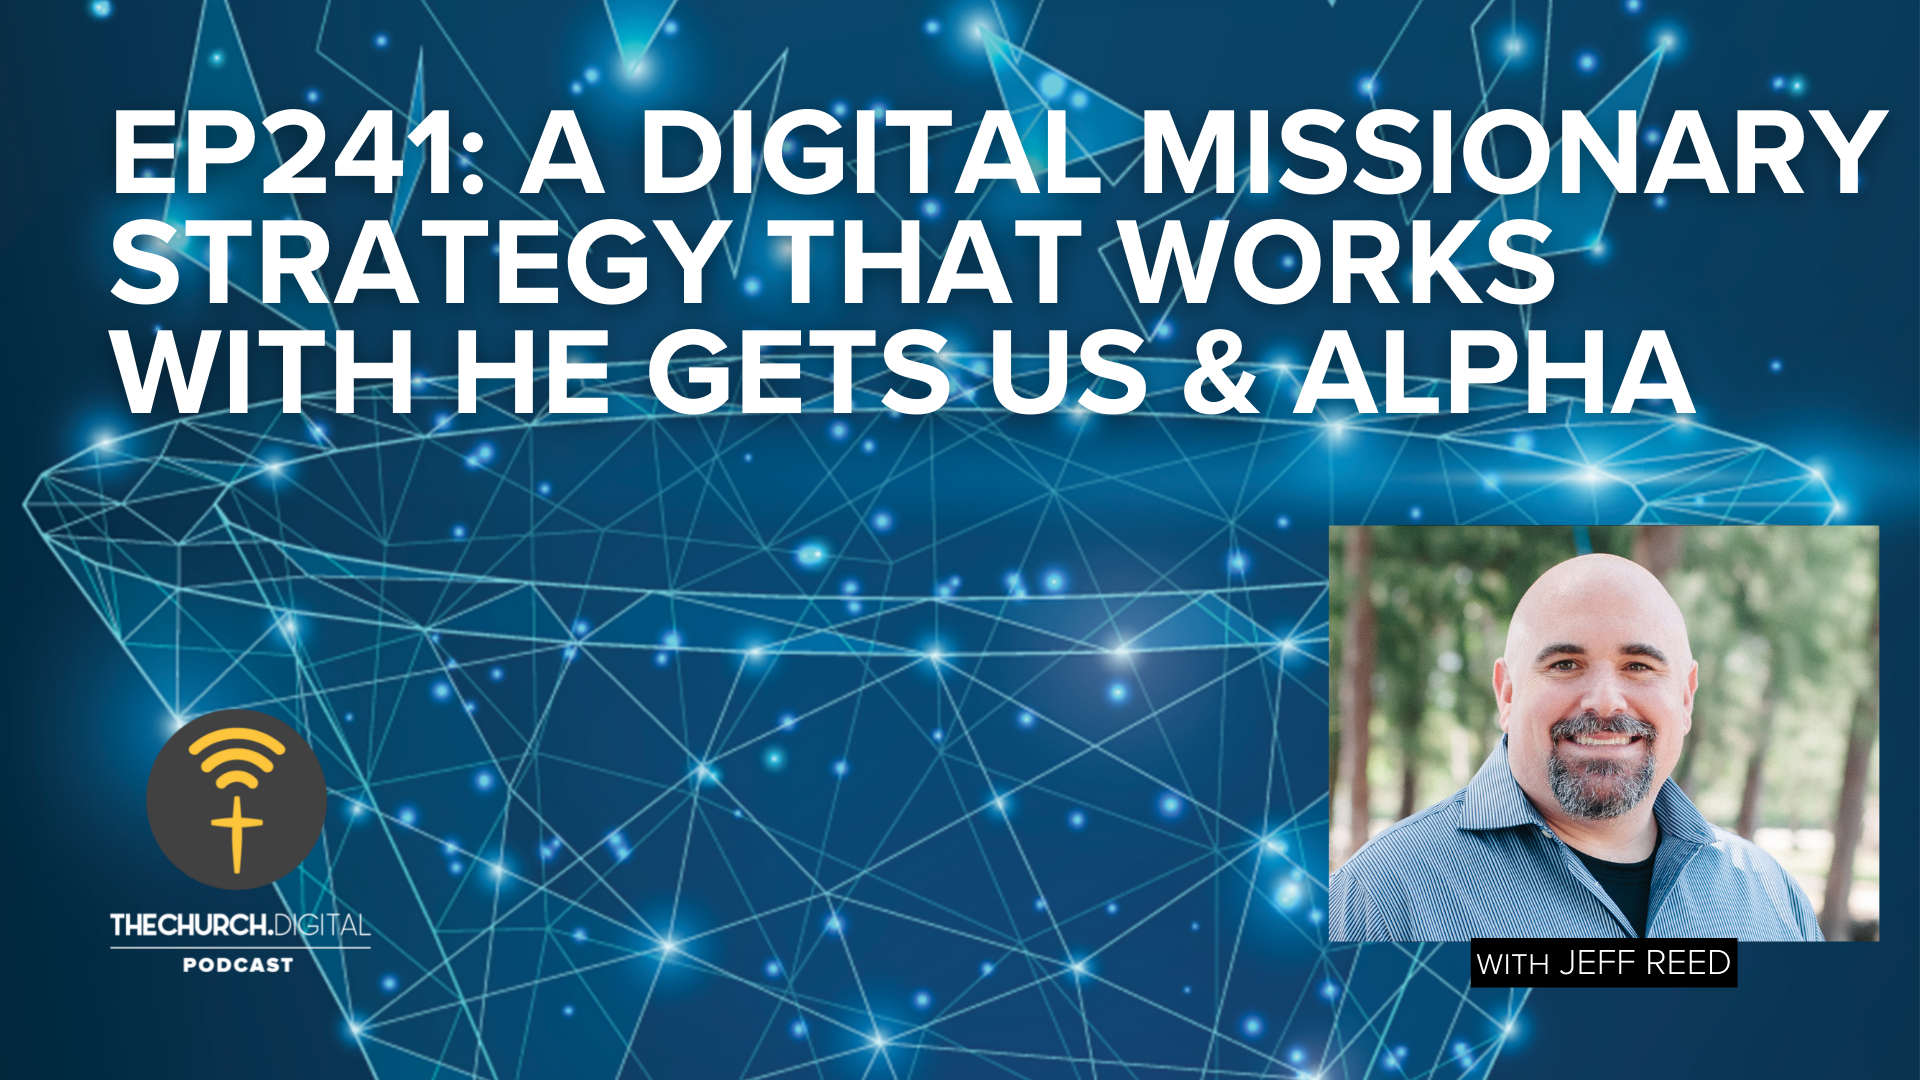 Digital Missionary